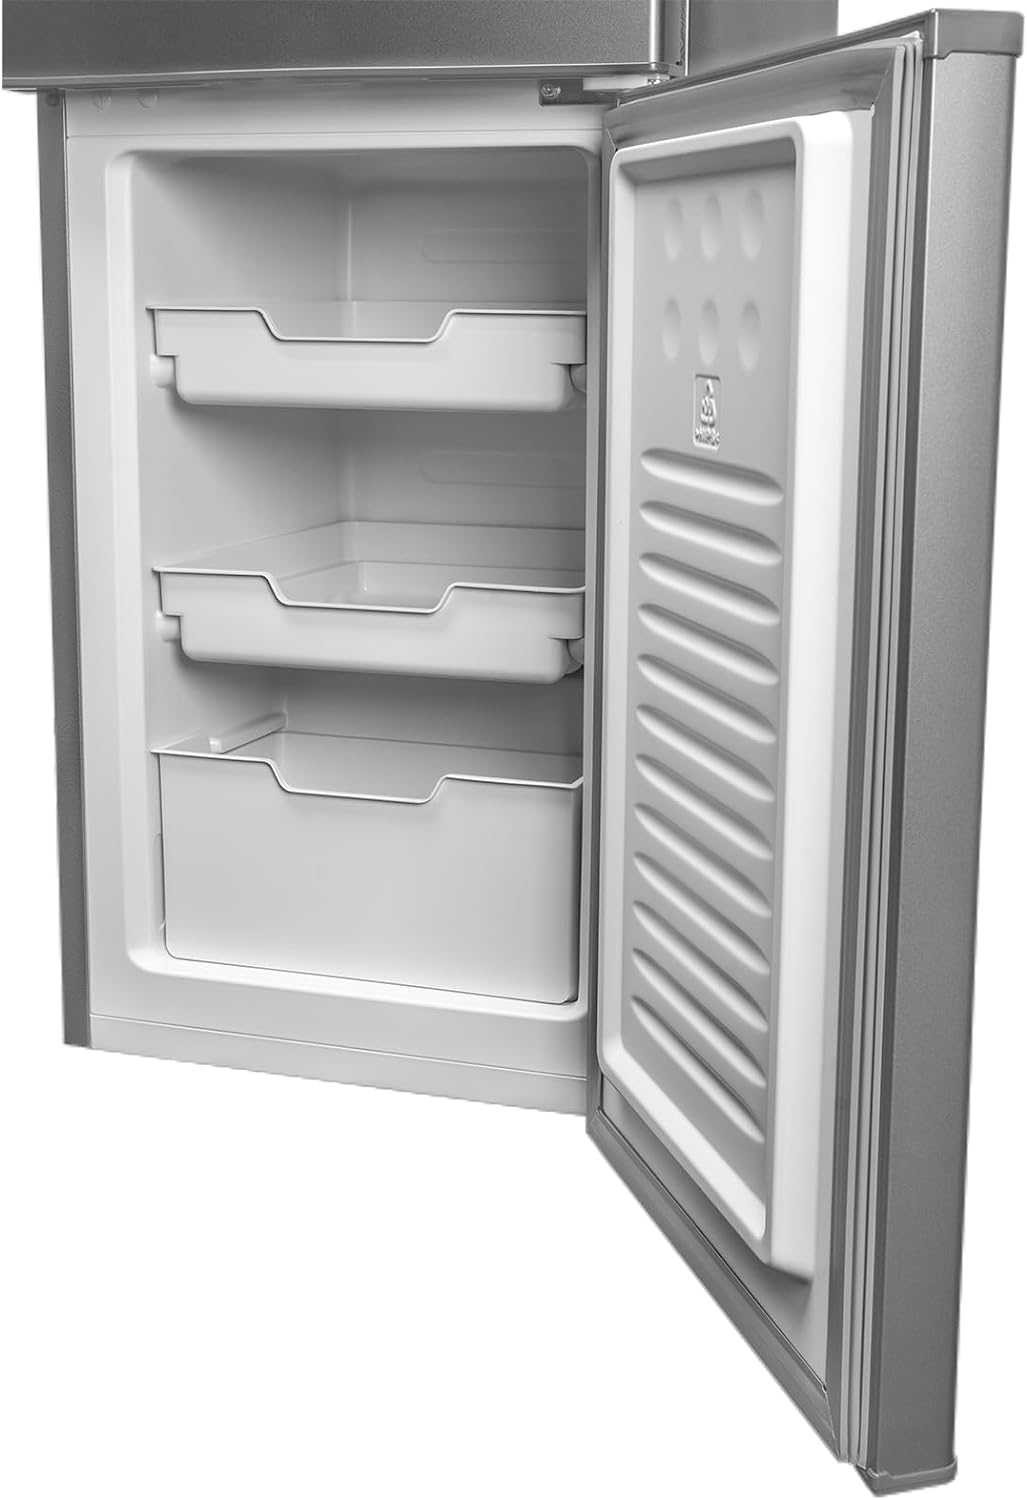 SIA SFF1570SI Freestanding stylish silver combi fridge freezer 182L capacity, 3 shelves, 3 freezer compartments, reversible door, adjustable legs, W474 x D528 x H1570, 2 year manufacturers guarantee - Amazing Gadgets Outlet